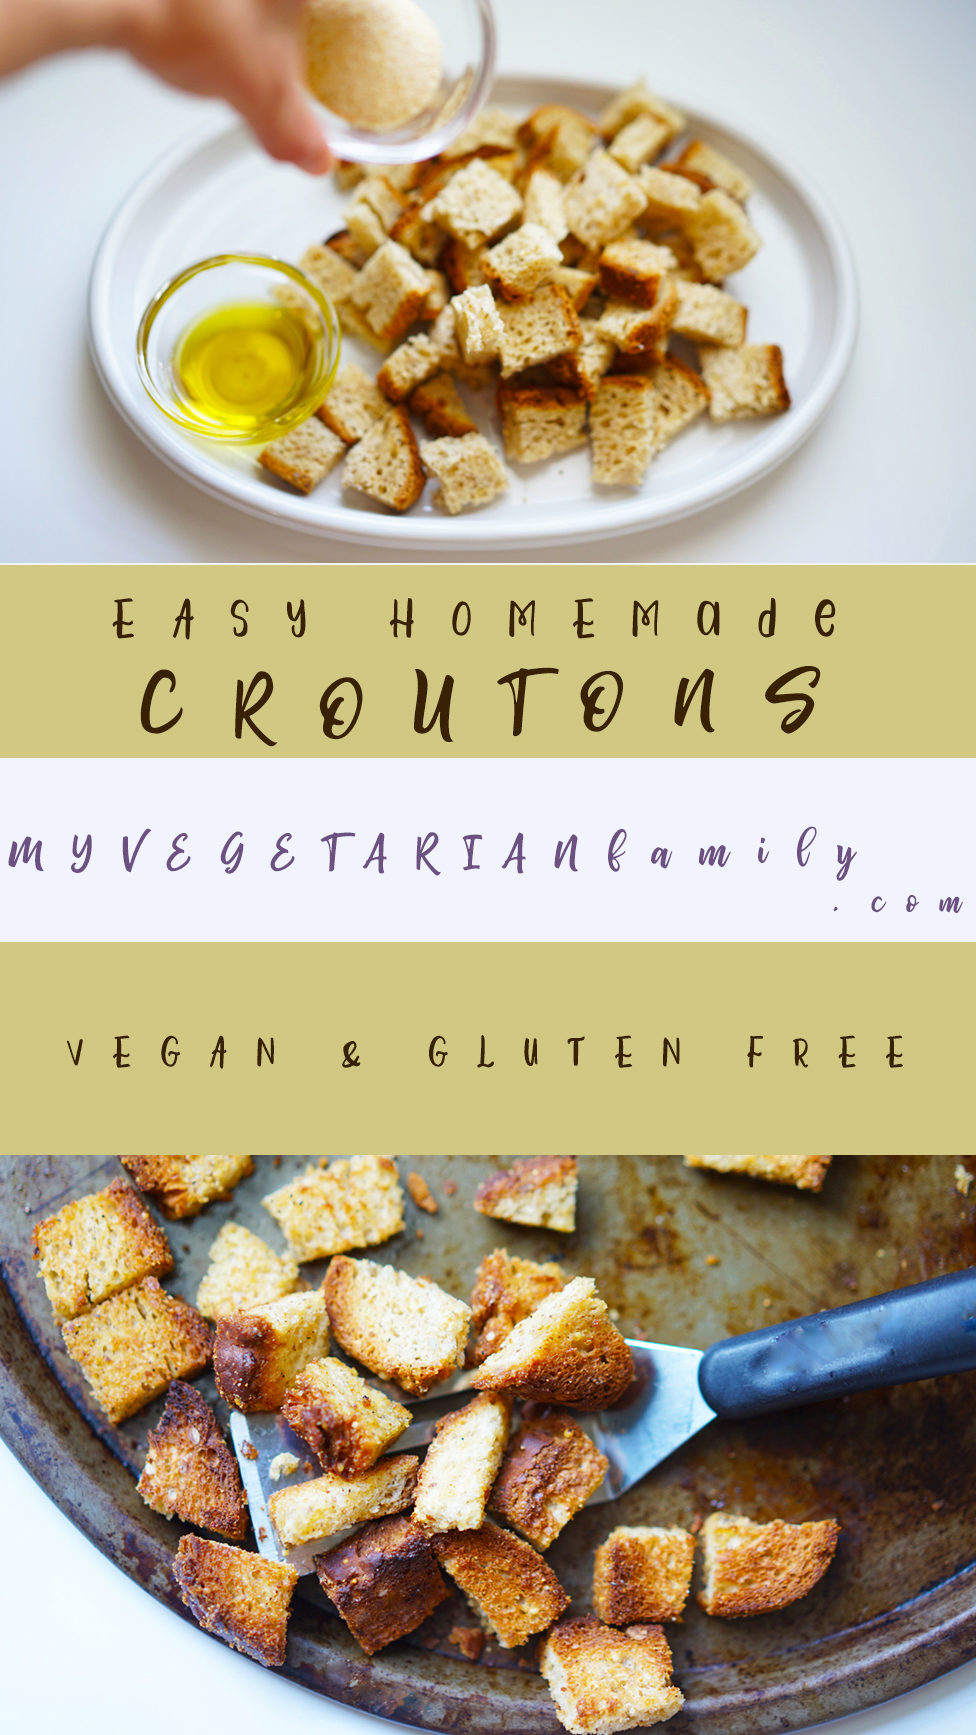 Easy Homemade Gluten Free Vegan Croutons Recipe #myvegetarianfamily